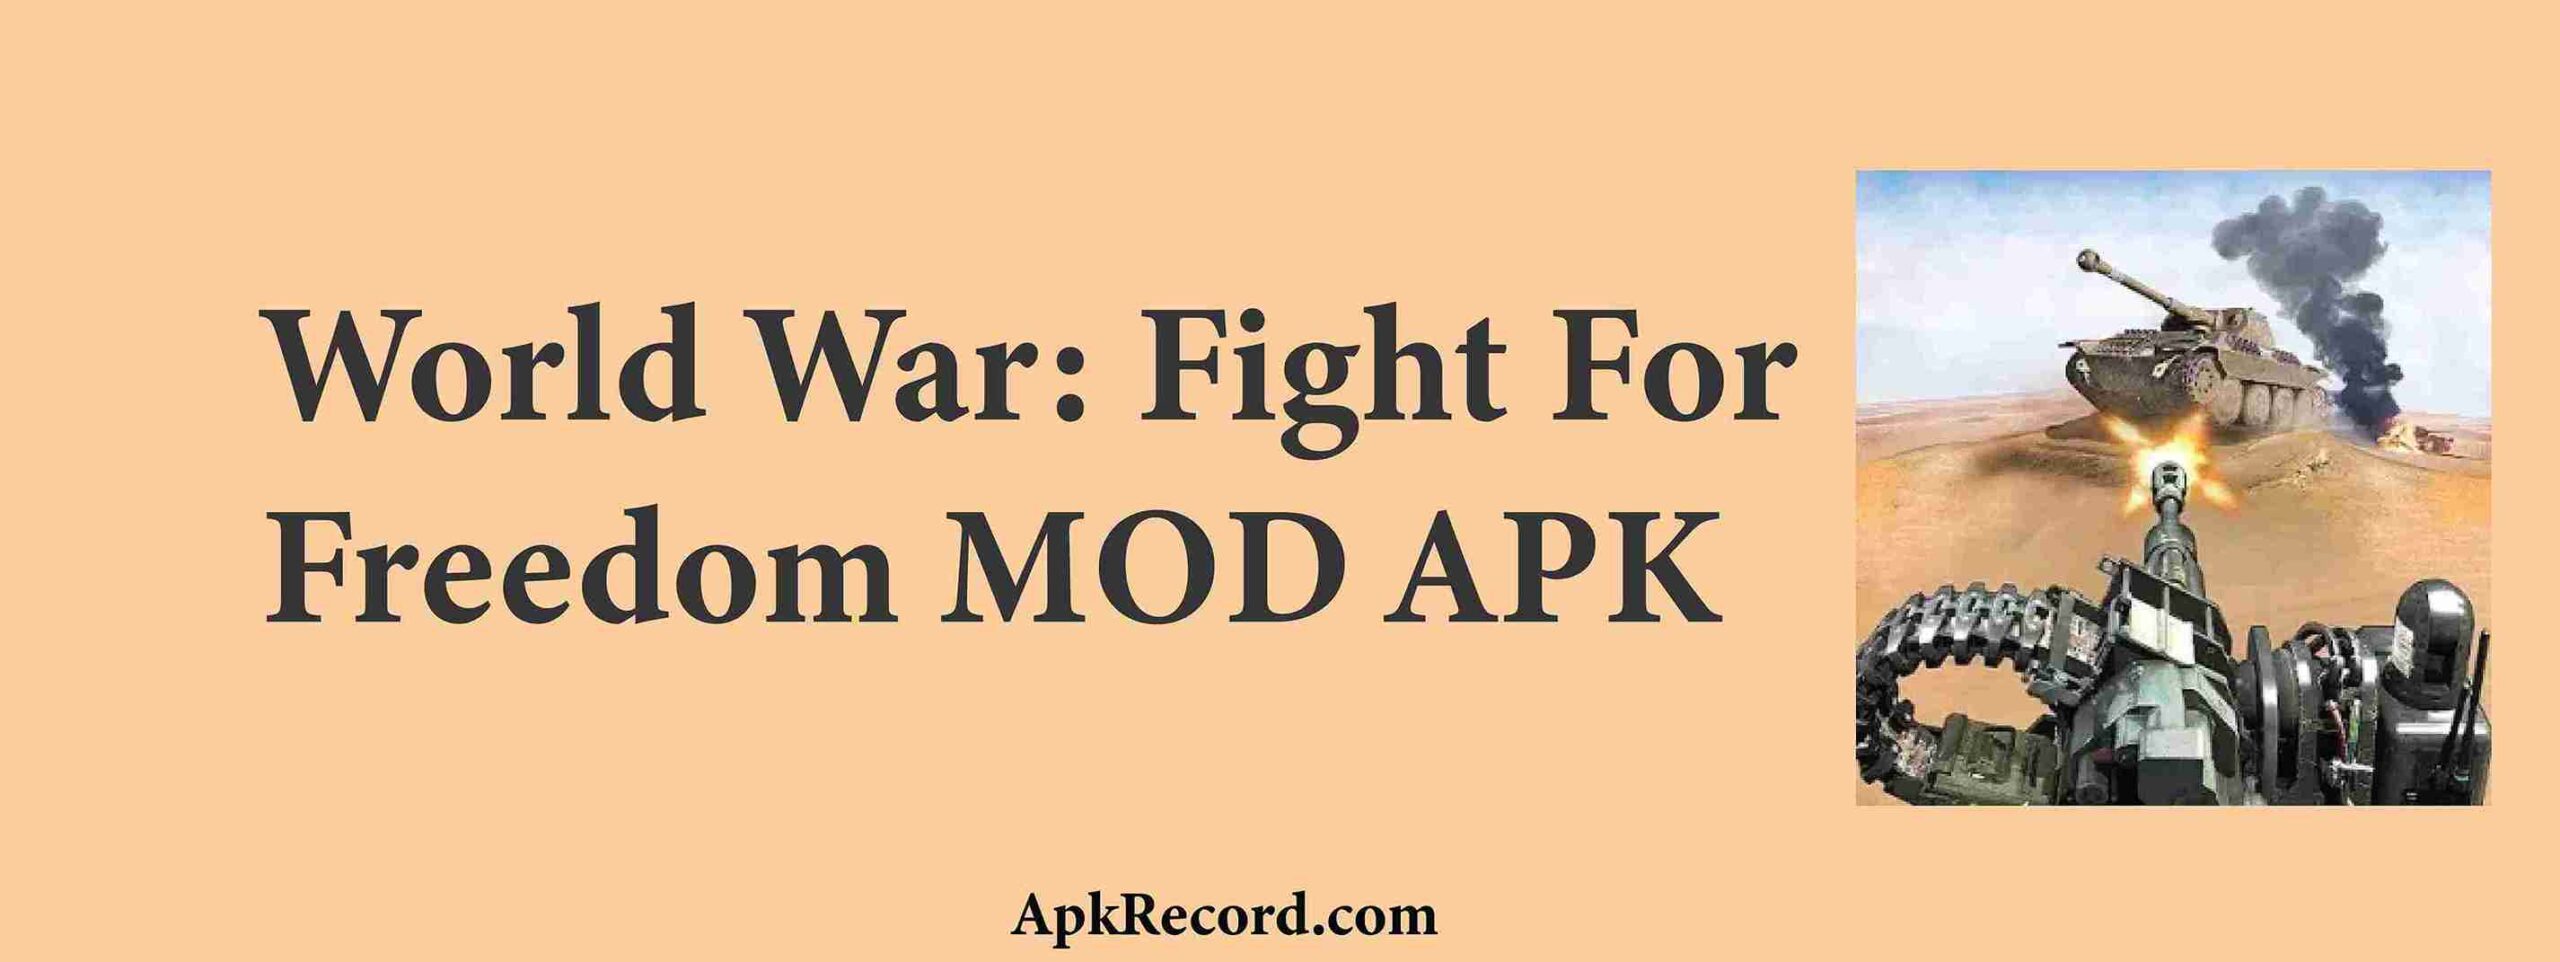 World War: Fight For Freedom MOD APK V0.1.8.2 